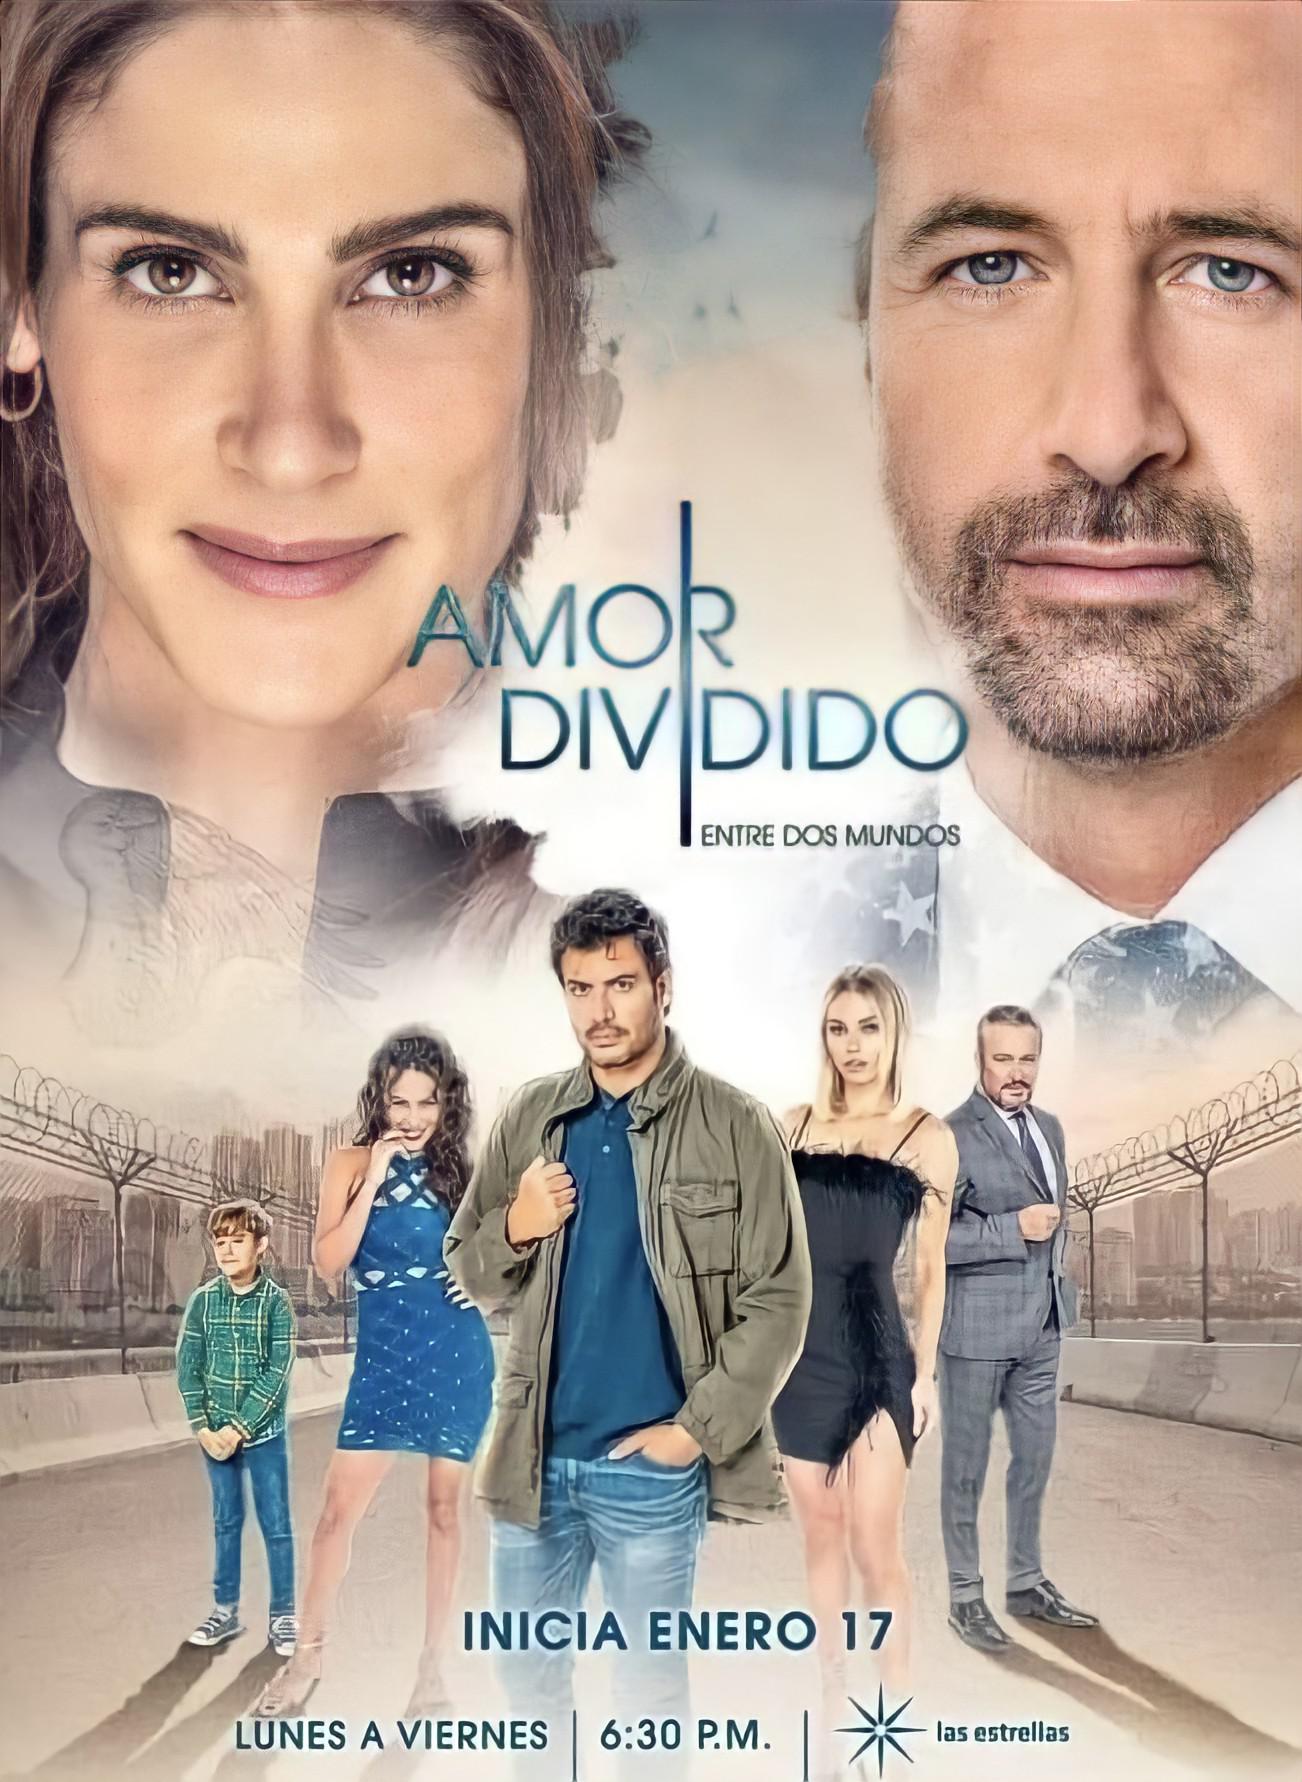 TV ratings for Amor Dividido in Poland. Las Estrellas TV series